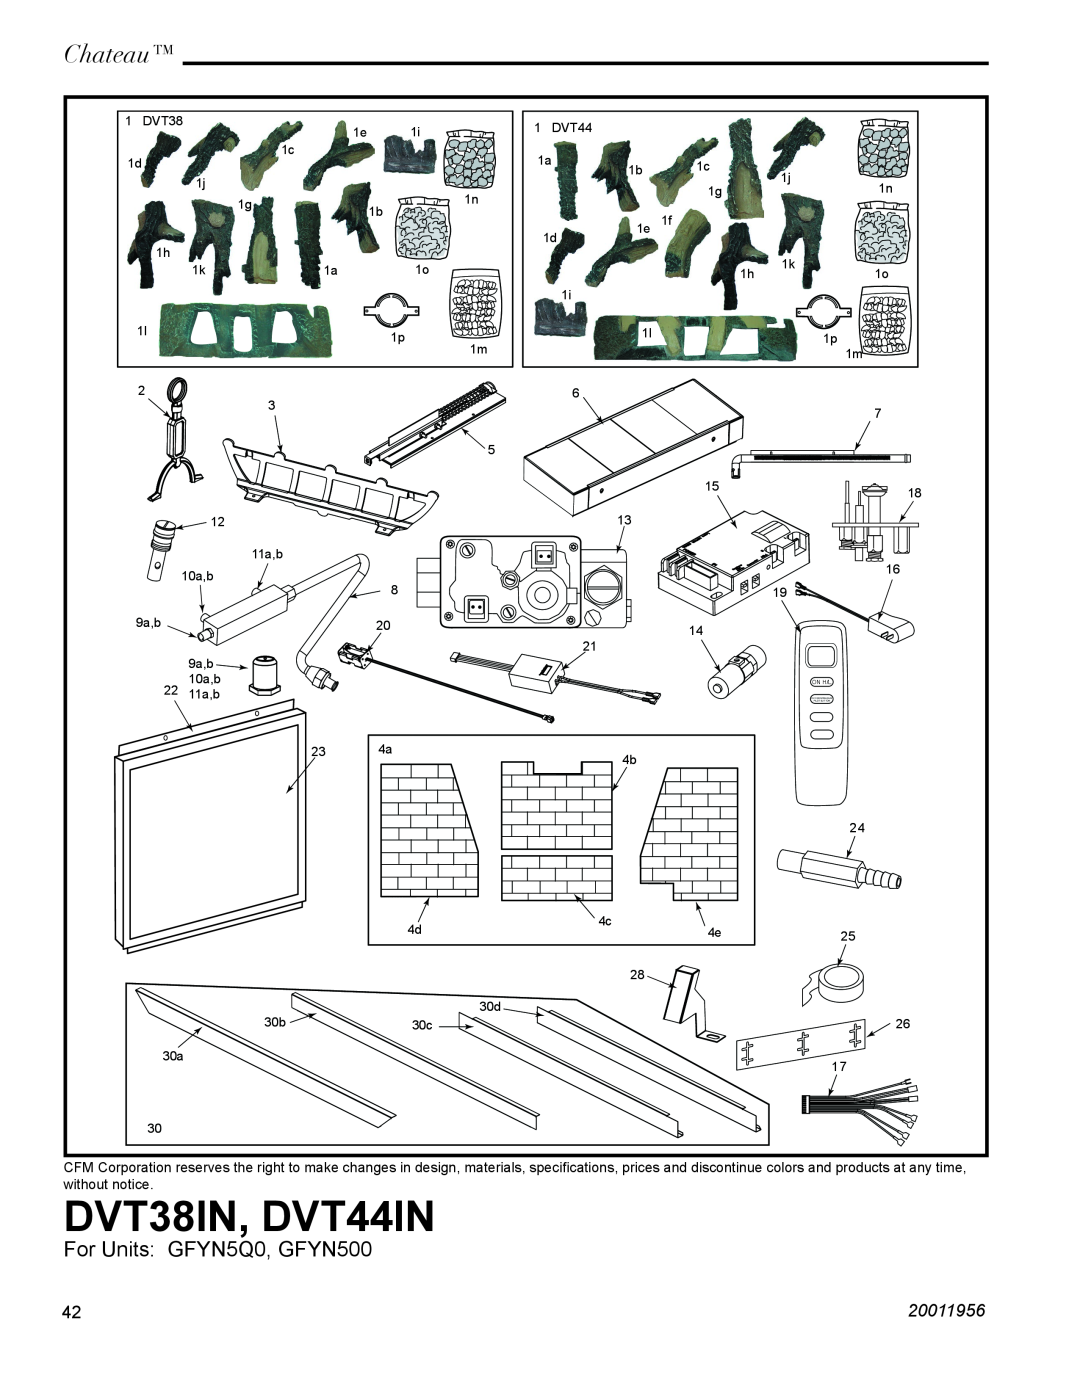 CFM Corporation installation instructions DVT38IN, DVT44IN, For Units: GFYN5Q0, GFYN500, Chateau, 20011956 